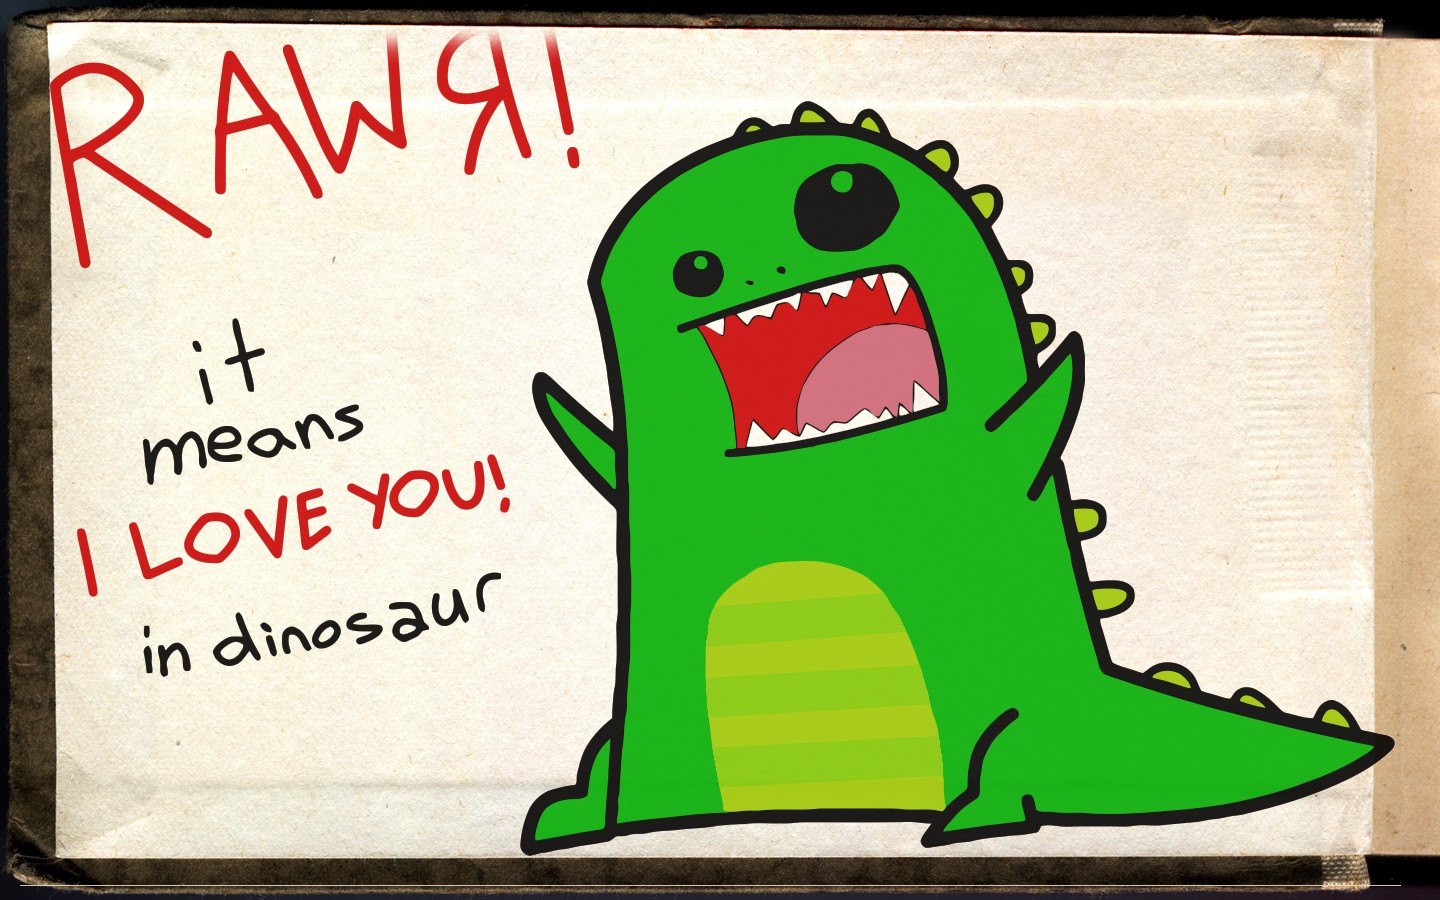 General 1440x900 humor creature green dinosaurs digital art text